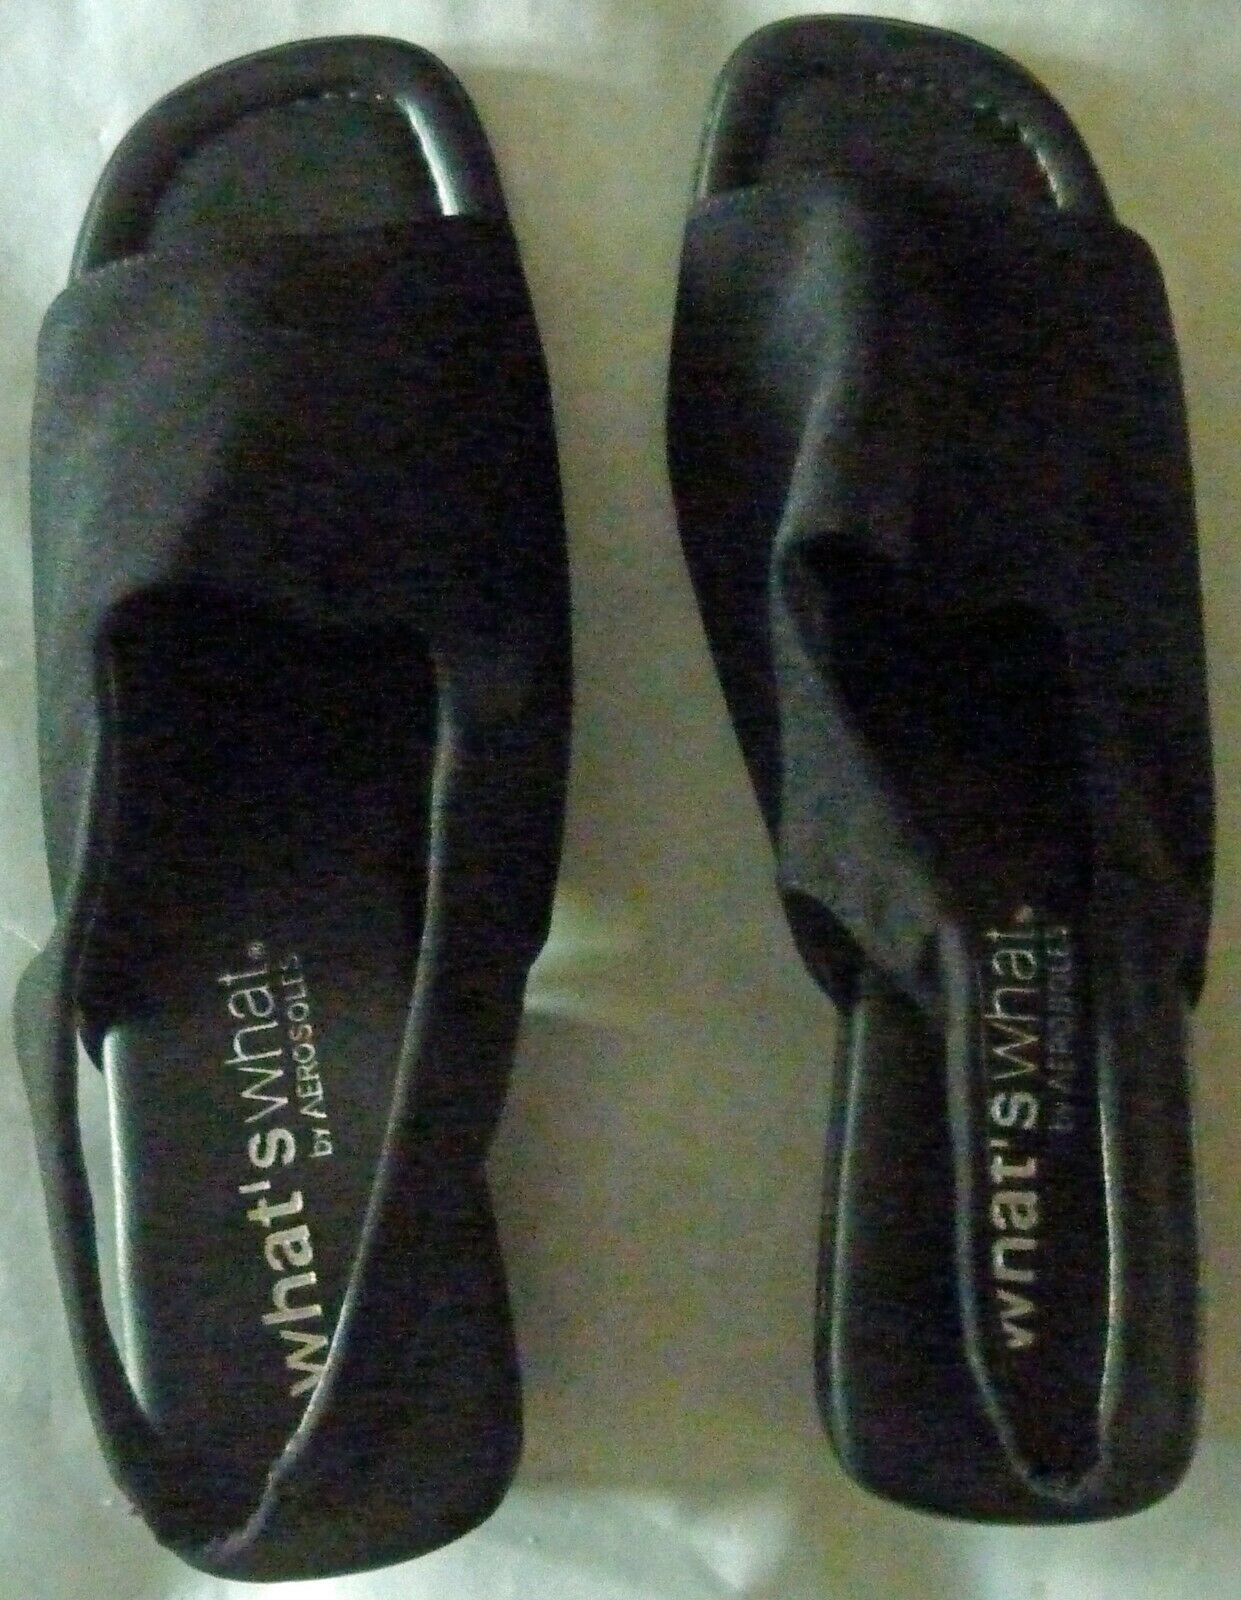 What's What by Aerosoles Women's Black Open Toe & Heel Shoes - Size 7